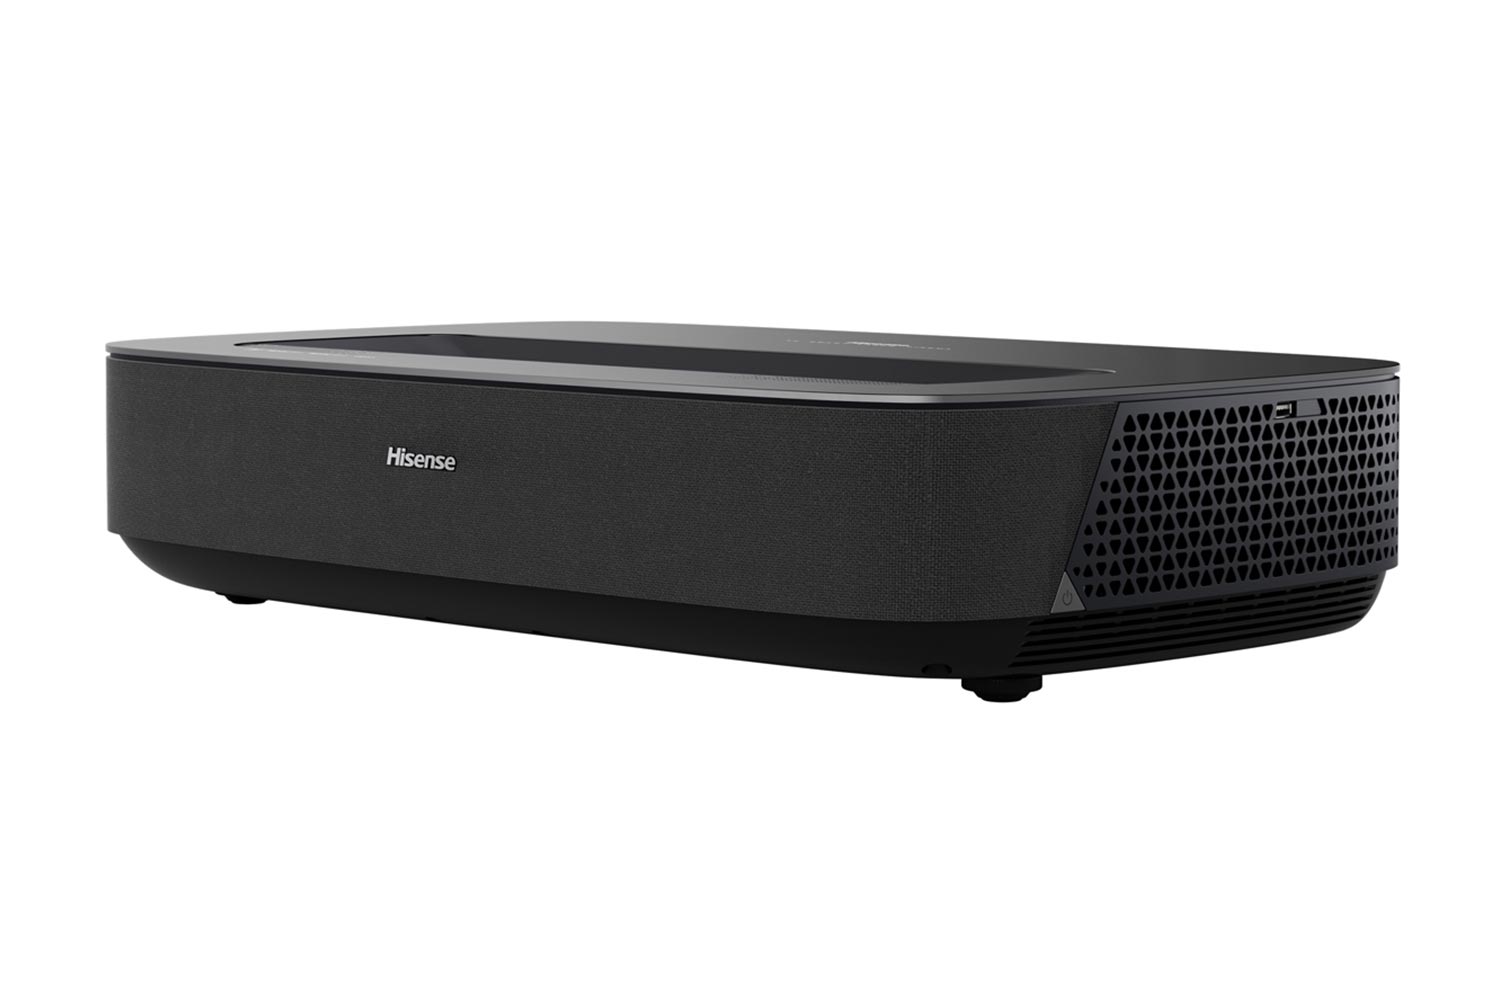 Hisense PL1 4K Ultra HD Laser TV - HEIMKINORAUM Edition